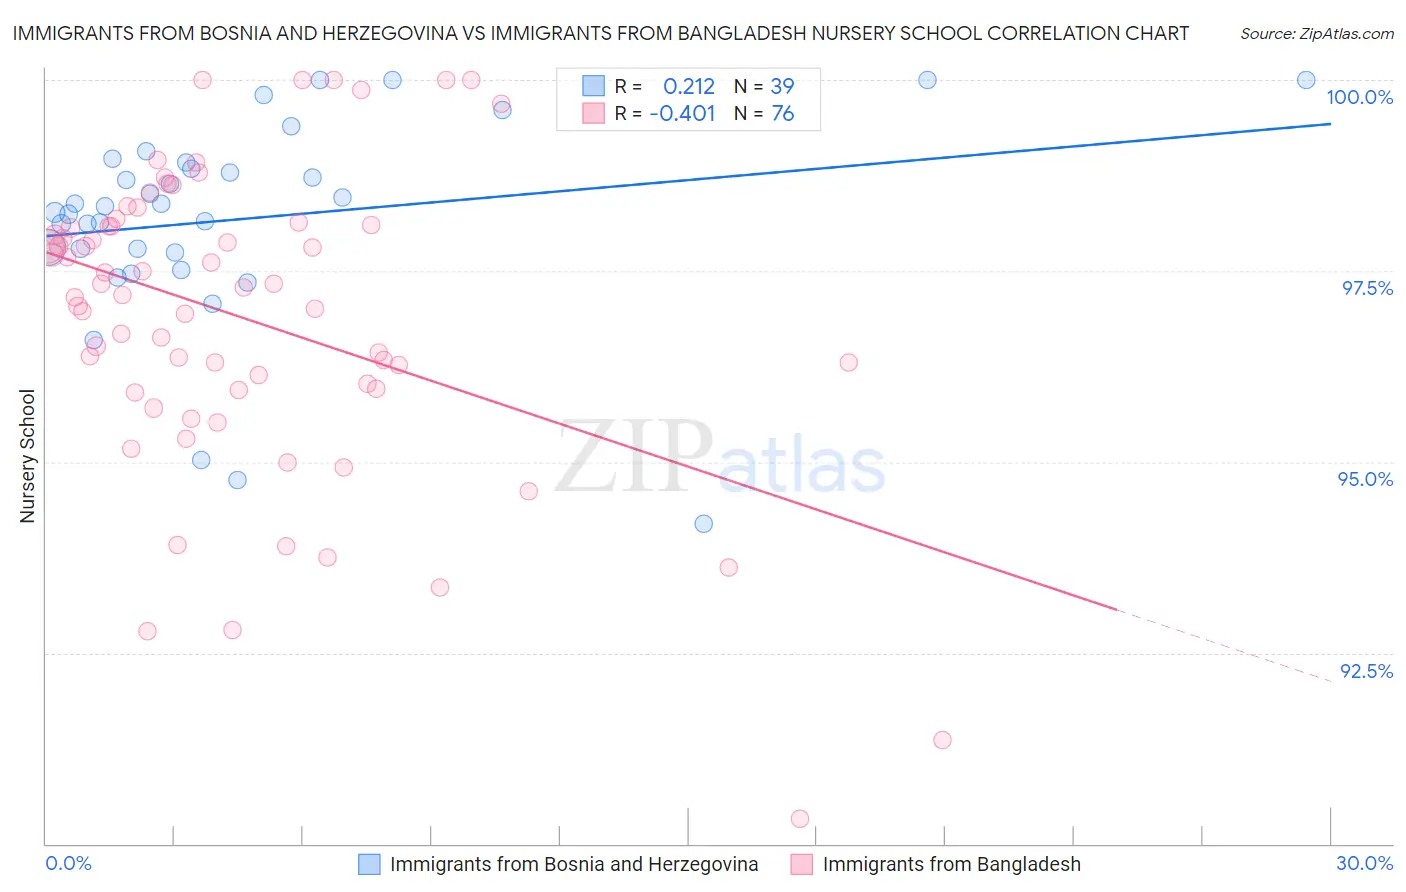 Immigrants from Bosnia and Herzegovina vs Immigrants from Bangladesh Nursery School